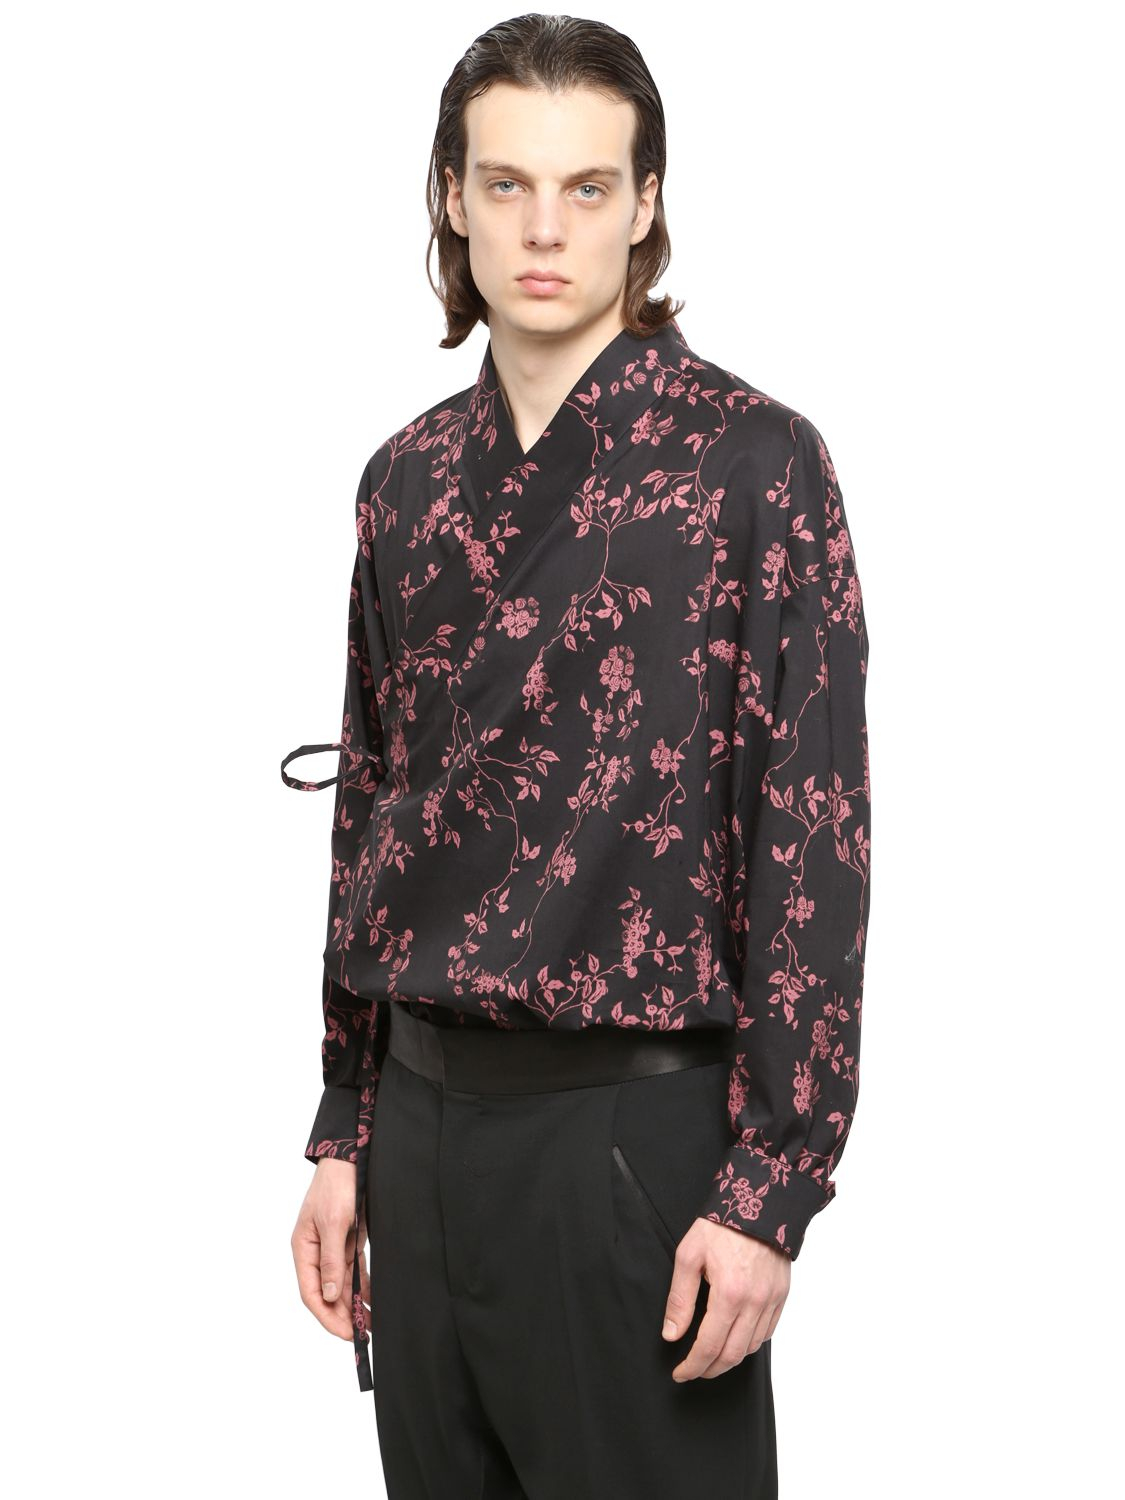 Haider Ackermann Floral Printed Cotton Kimono Shirt in Black/Purple (Pink)  - Lyst